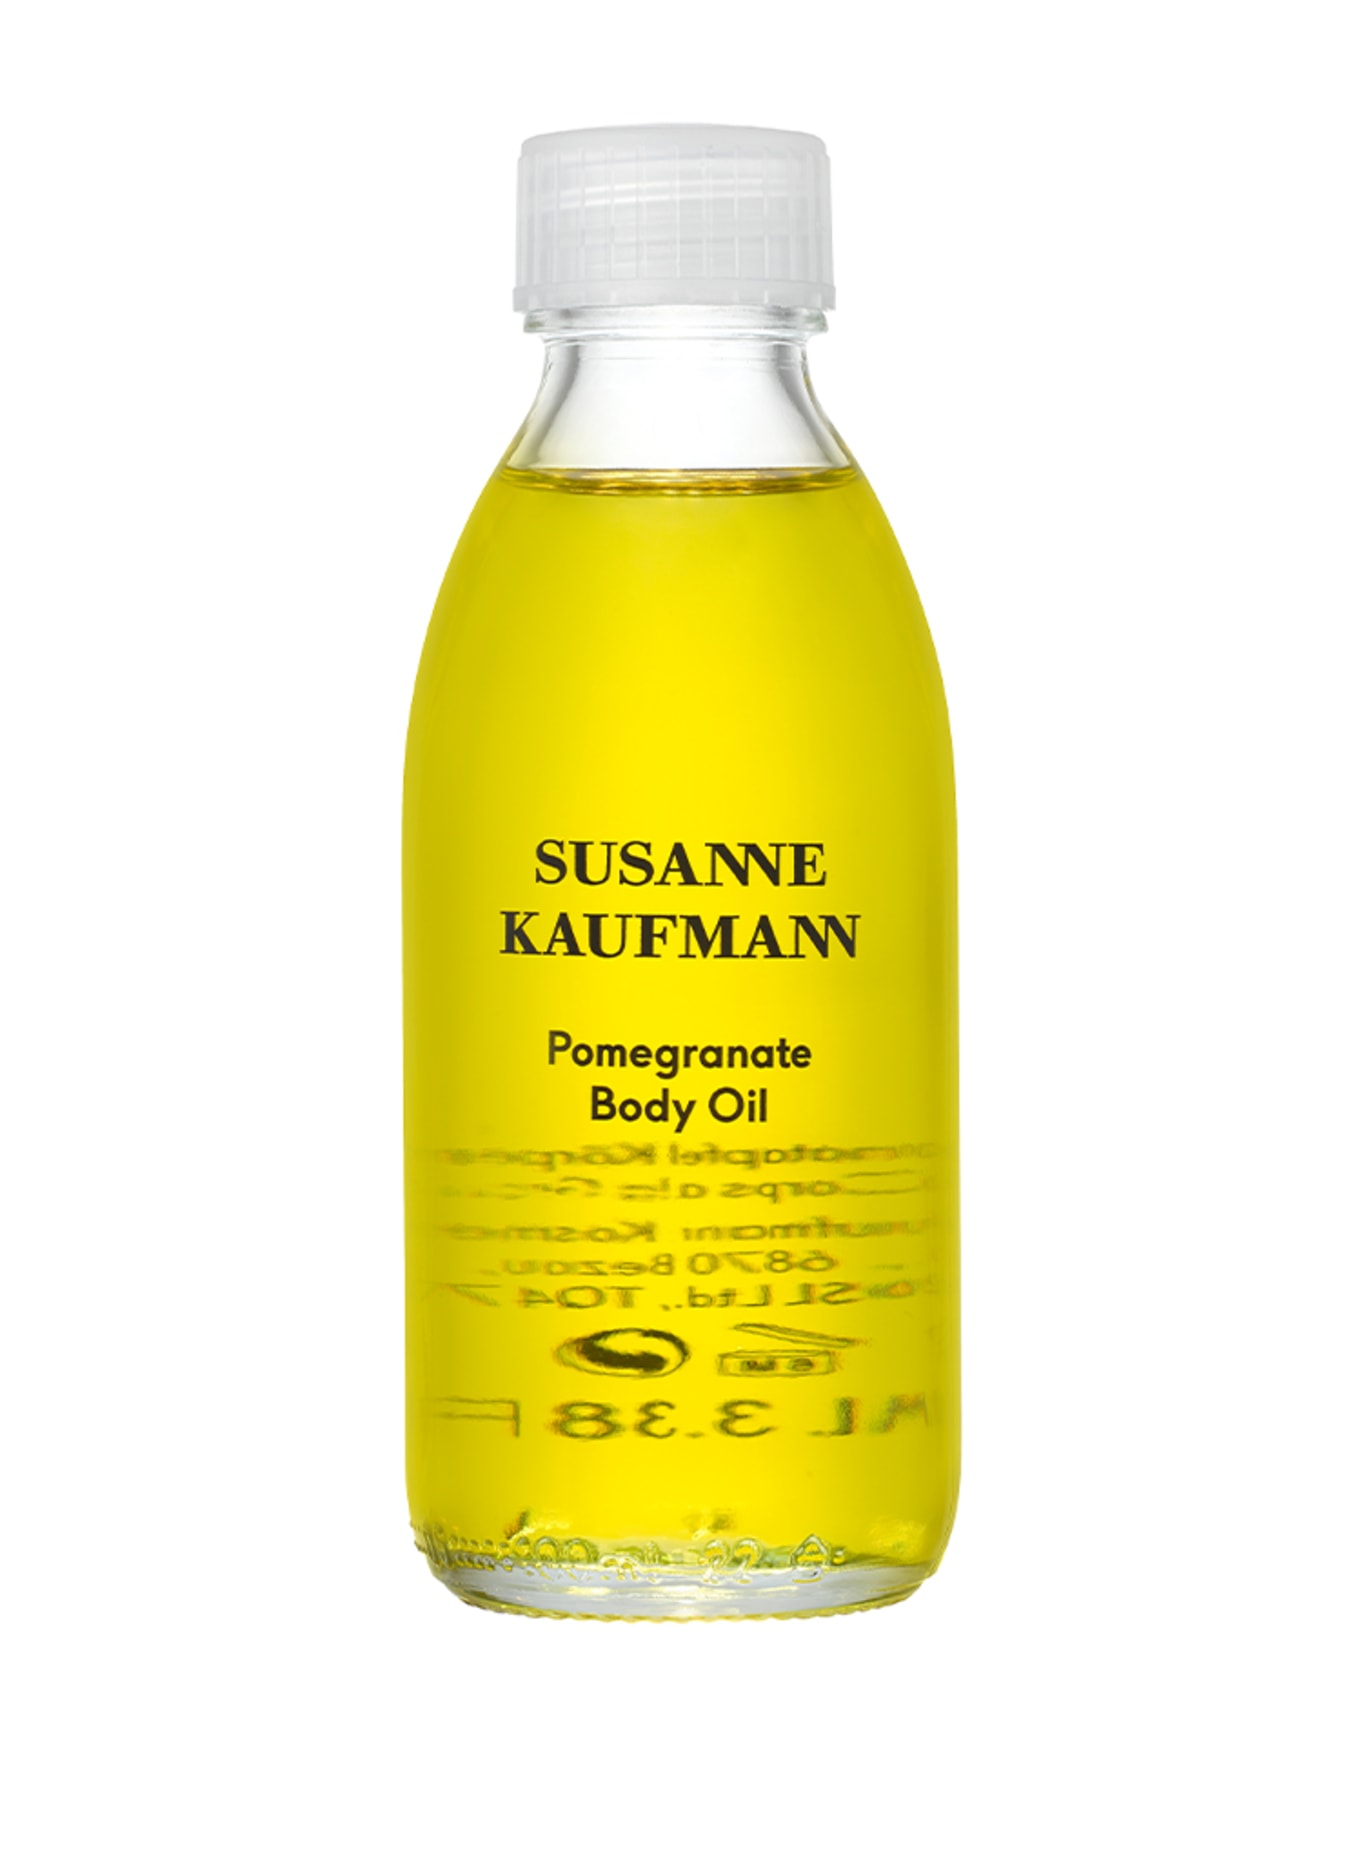 SUSANNE KAUFMANN POMEGRANATE BODY OIL (Bild 1)